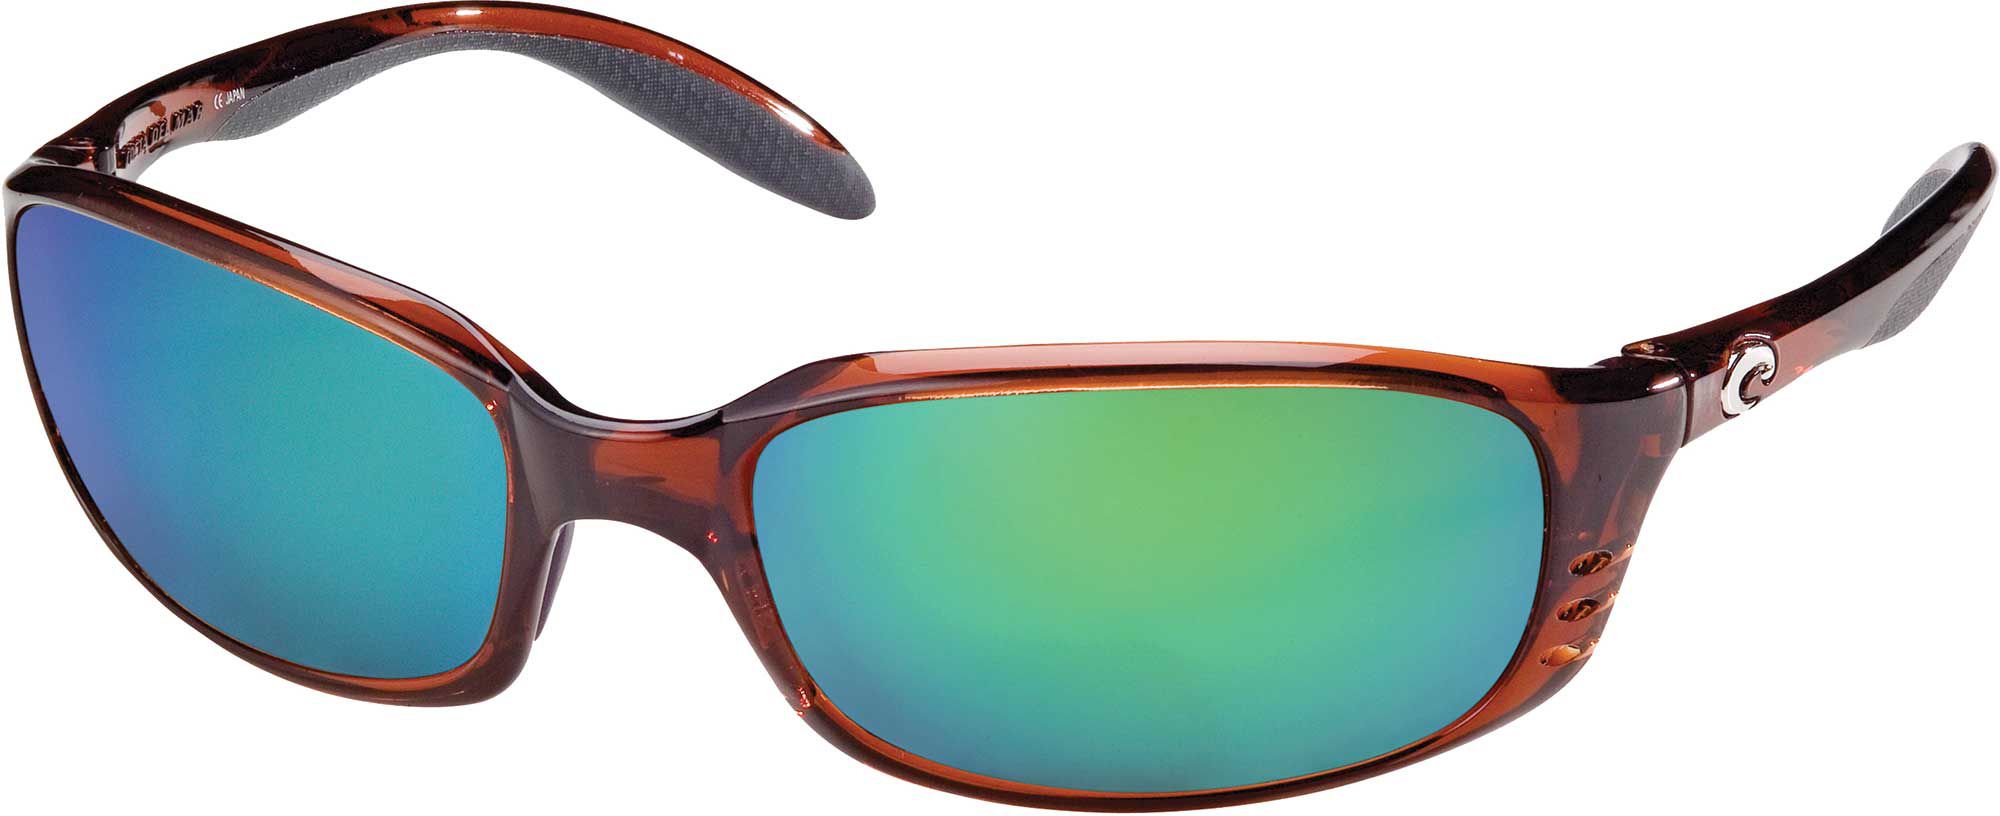 Photos - Sunglasses Costa Del Mar W580 Brine Polarized , Men's, Tortoise/Green Mirro 